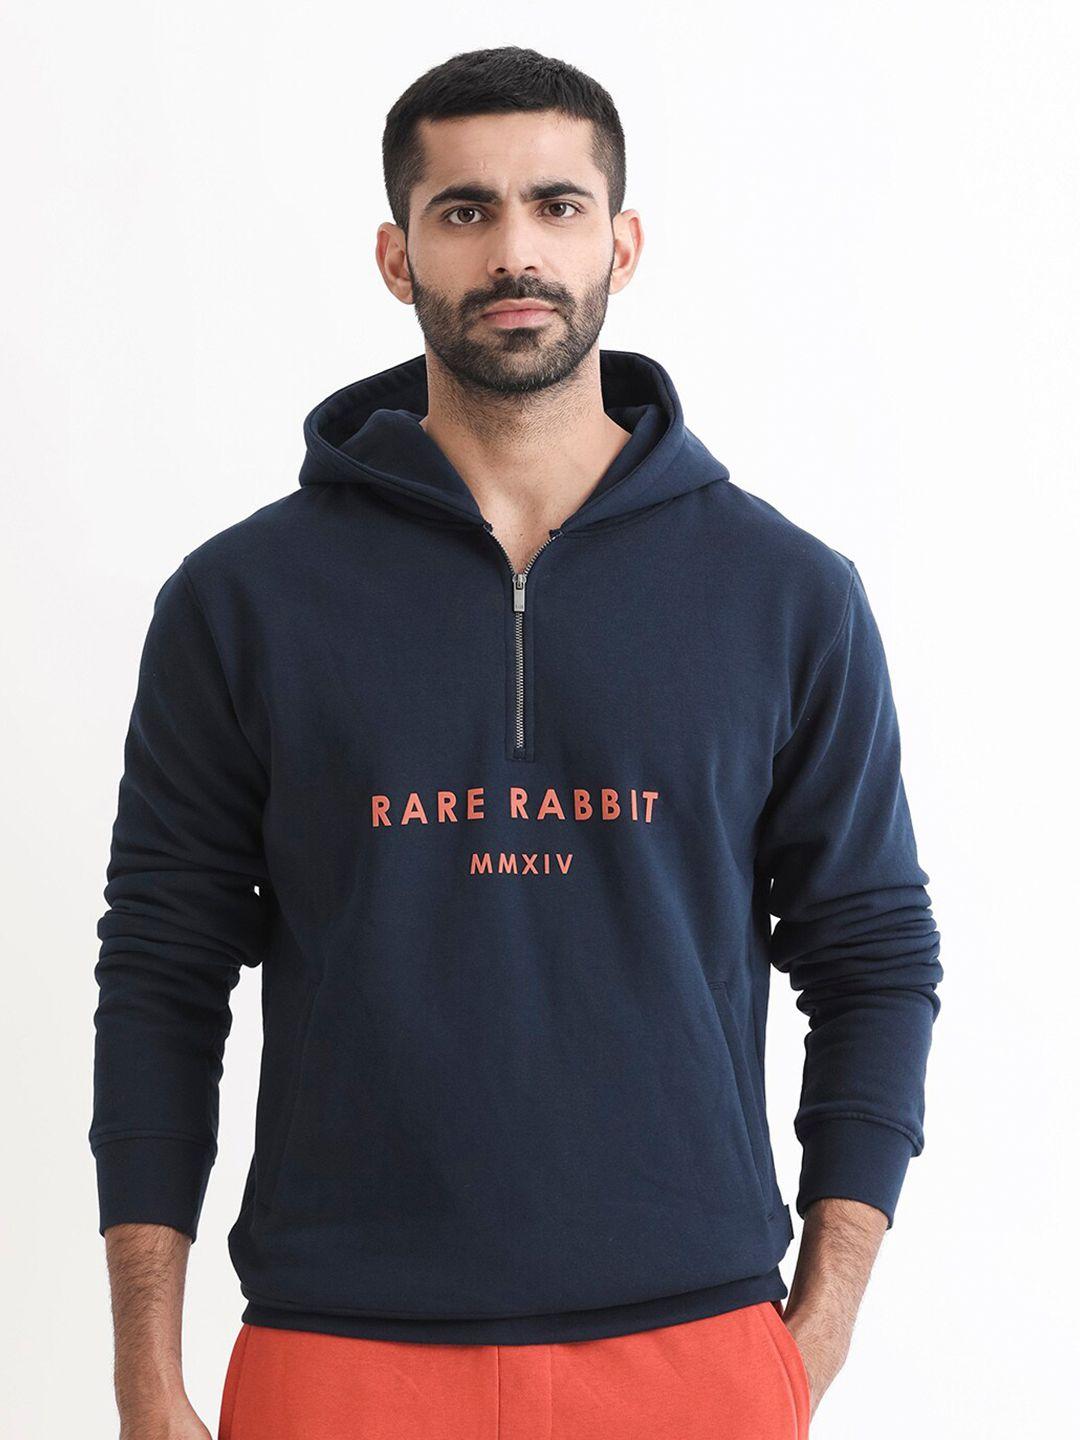 rare rabbit typograohy printed cotton hooded sweatshirt